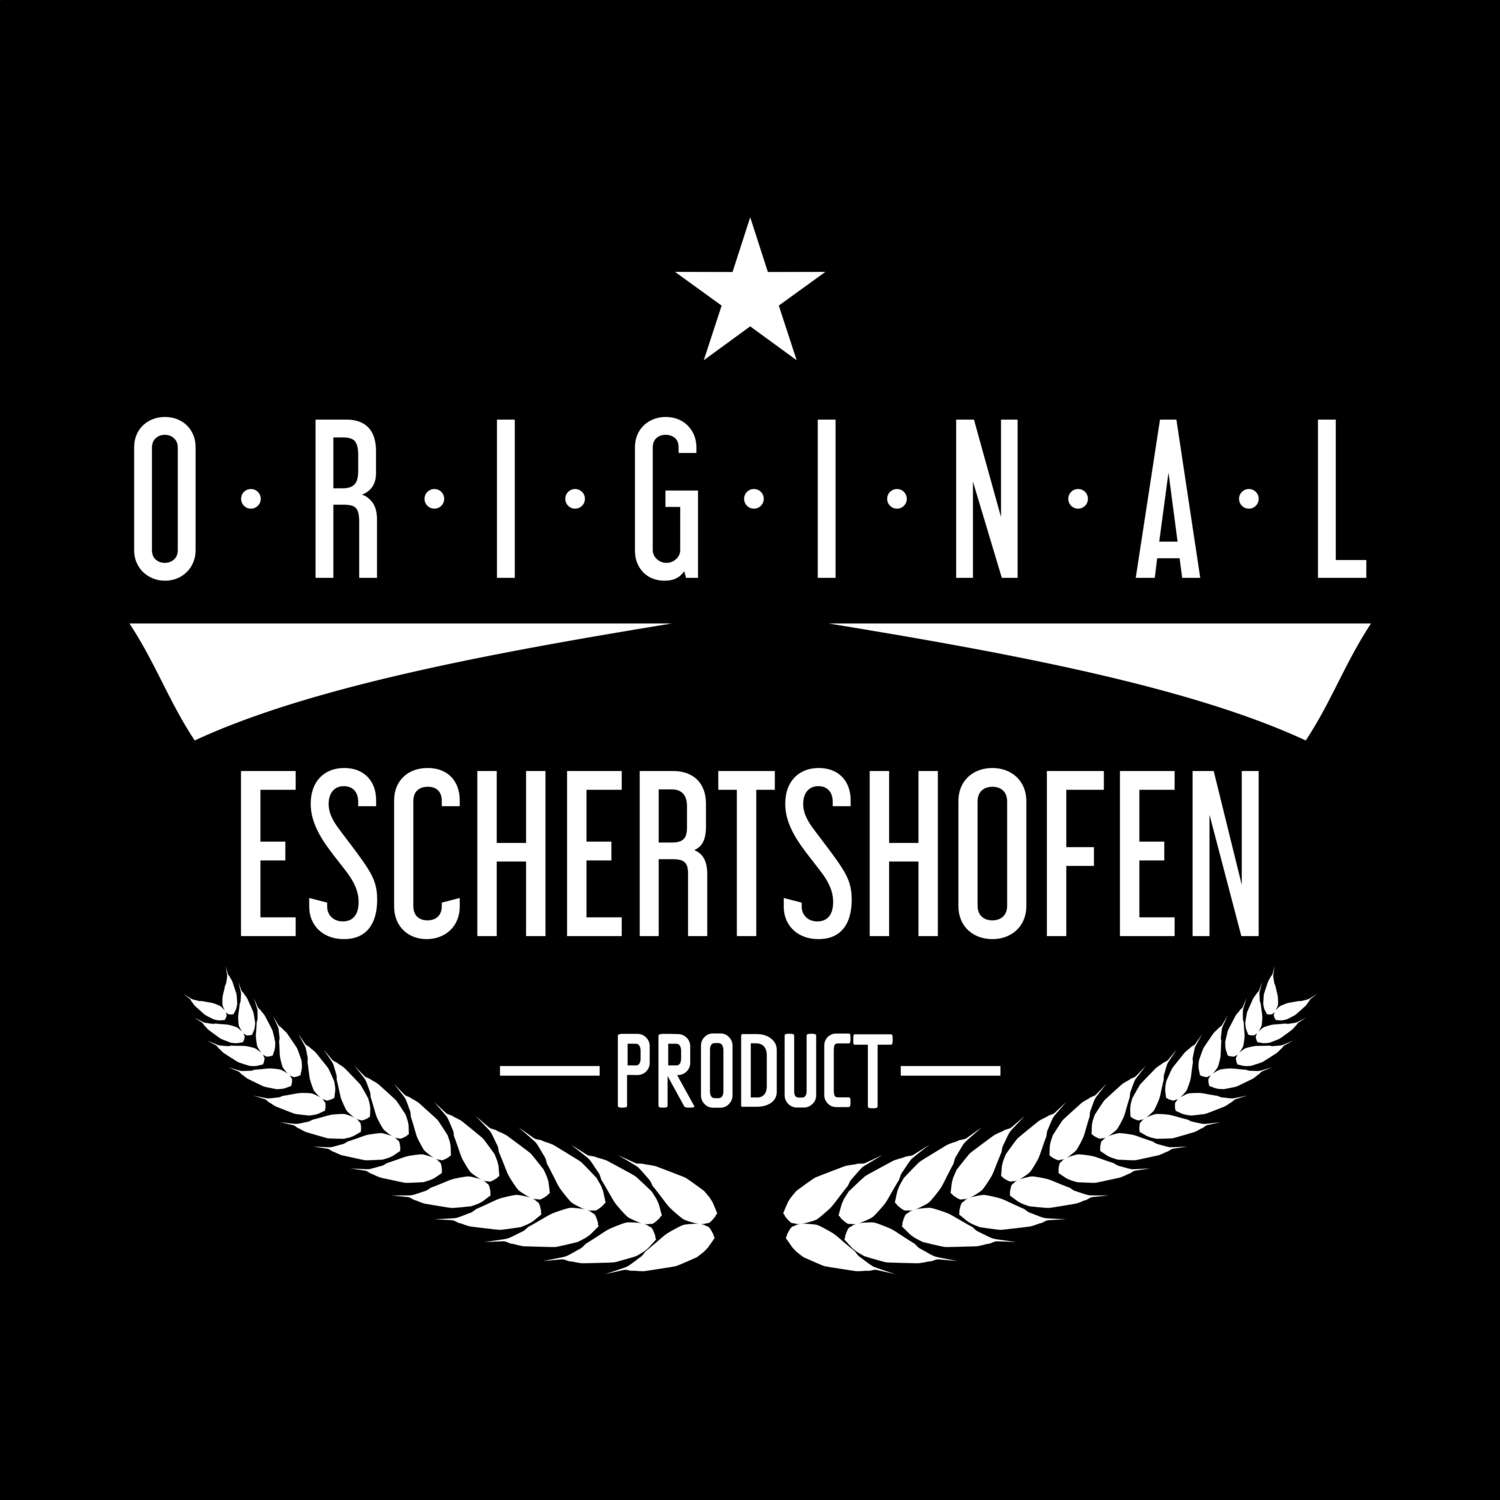 Eschertshofen T-Shirt »Original Product«